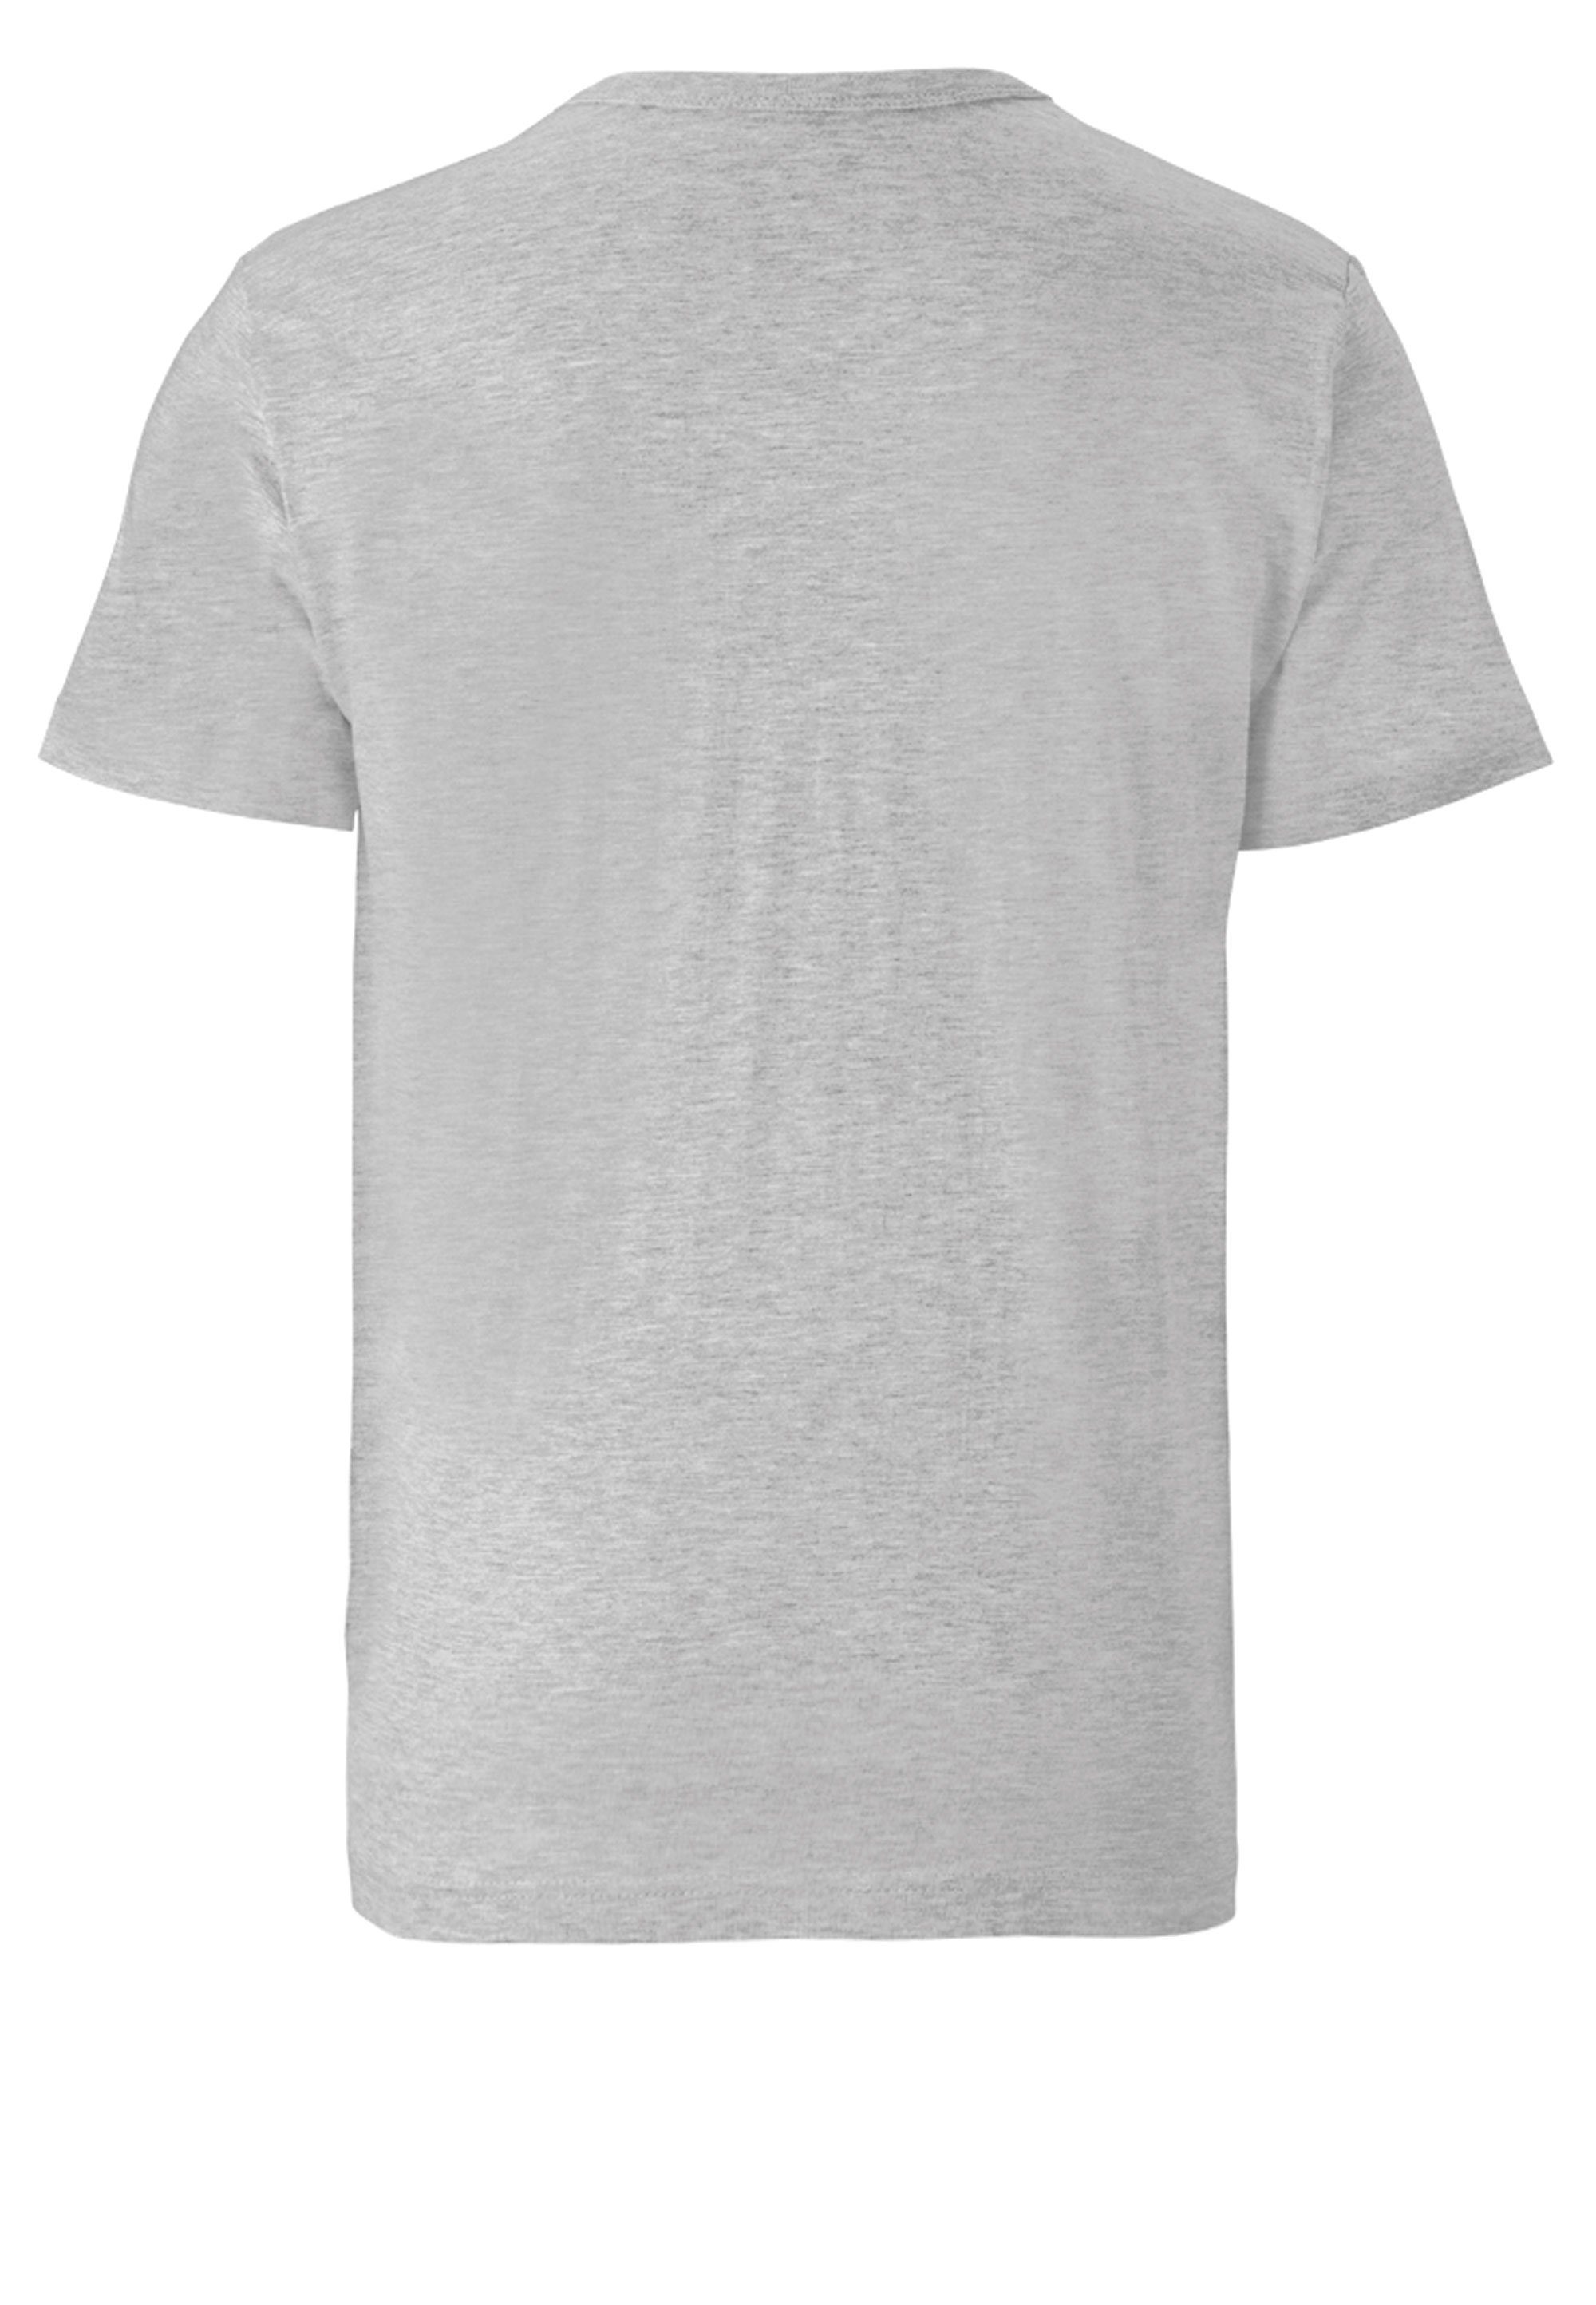 Originalddesign mit LOGOSHIRT T-Shirt lizenziertem - Krümelmonster grau-meliert Sesamstrasse